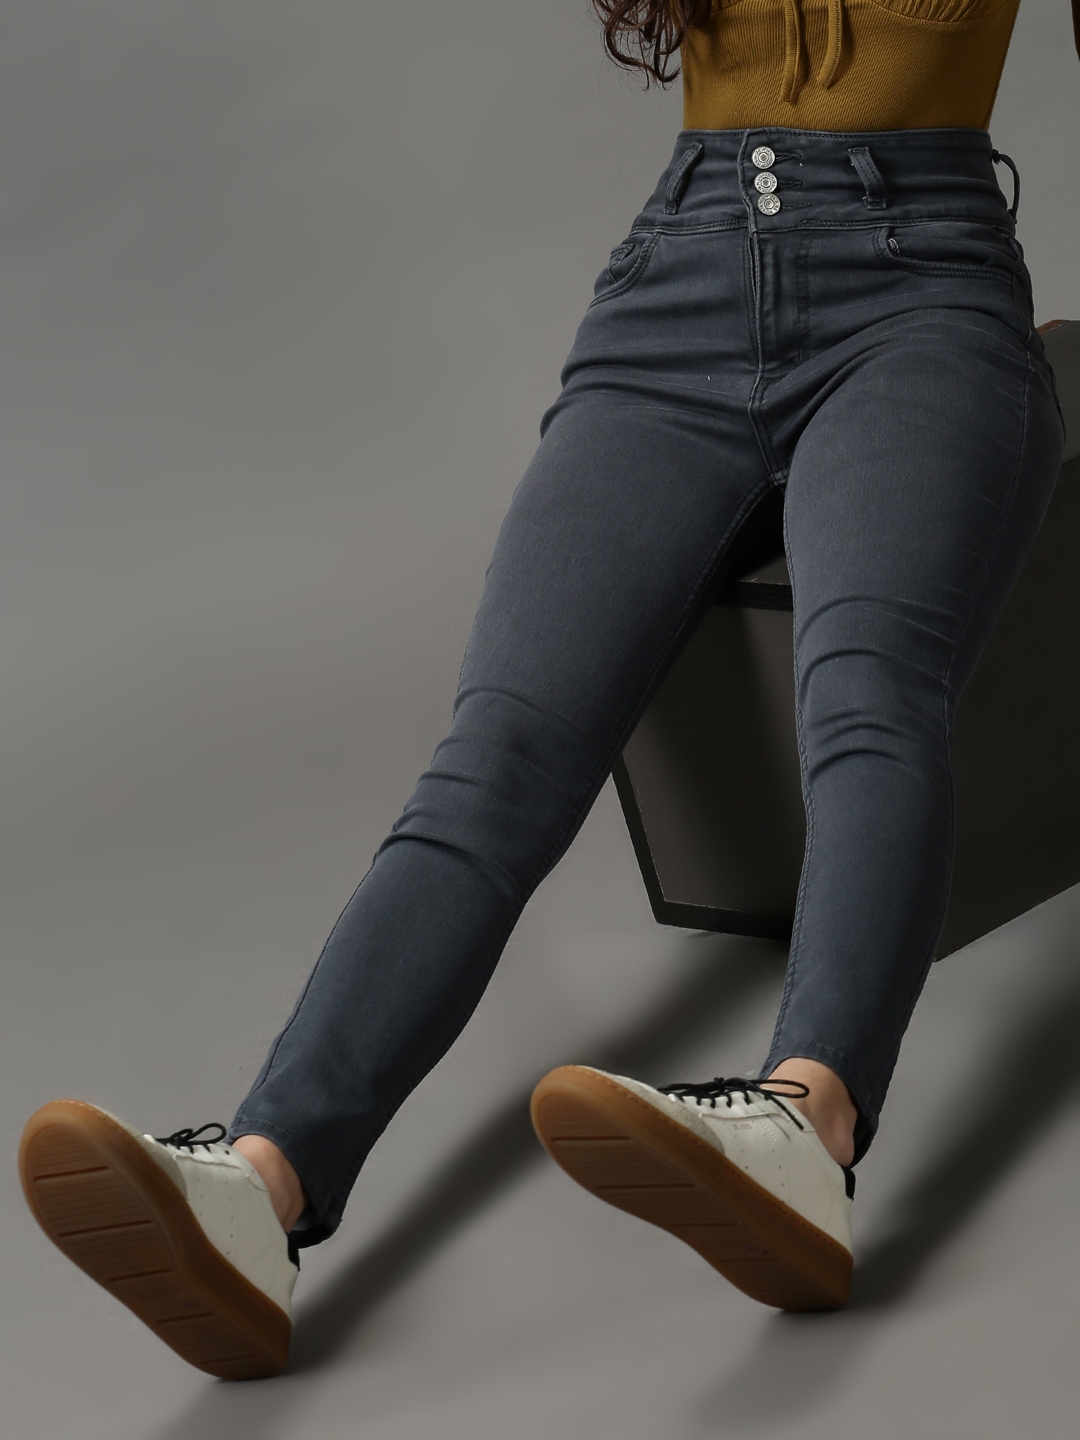 SHOWOFF Women's Clean Look Skinny Fit Grey Denim Jeans